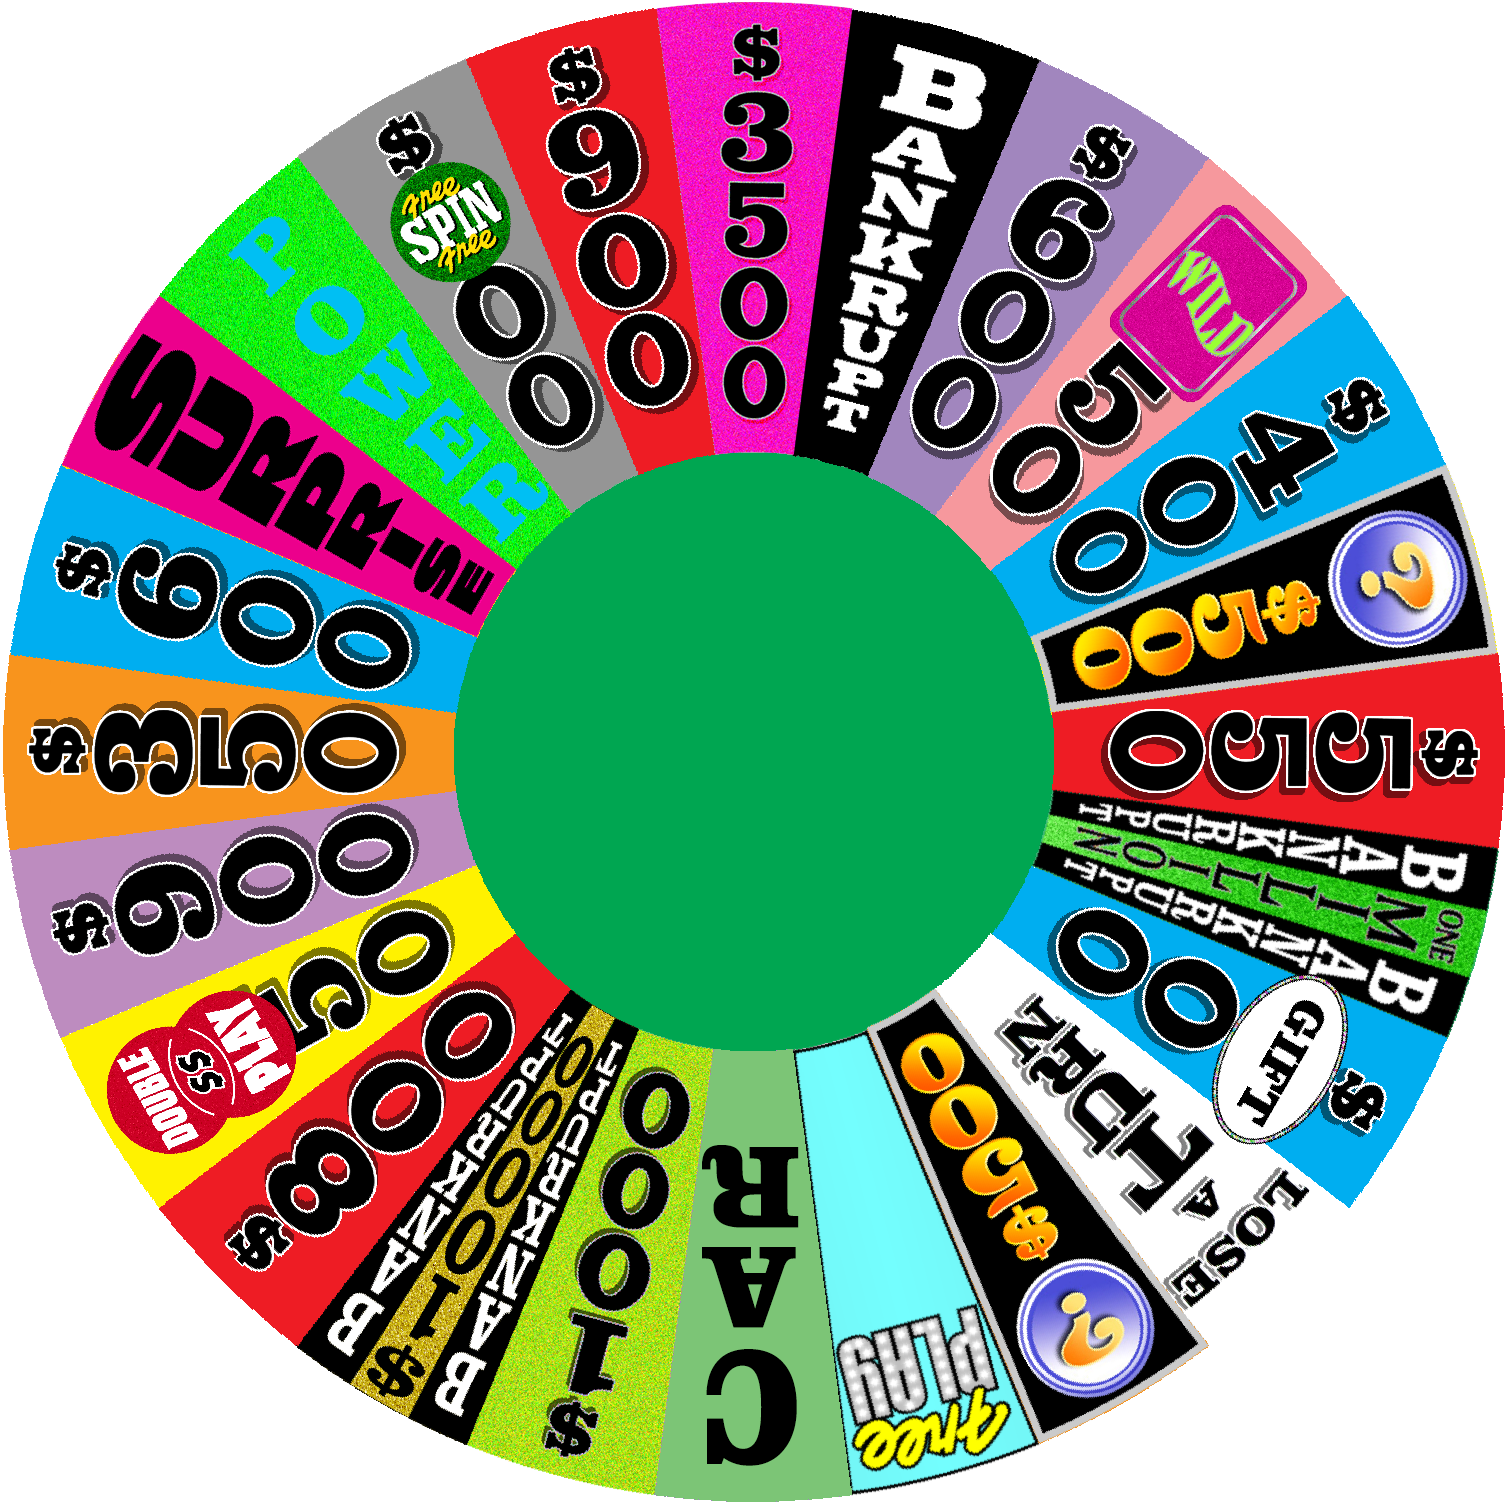 Wheel of fortune â when math happens